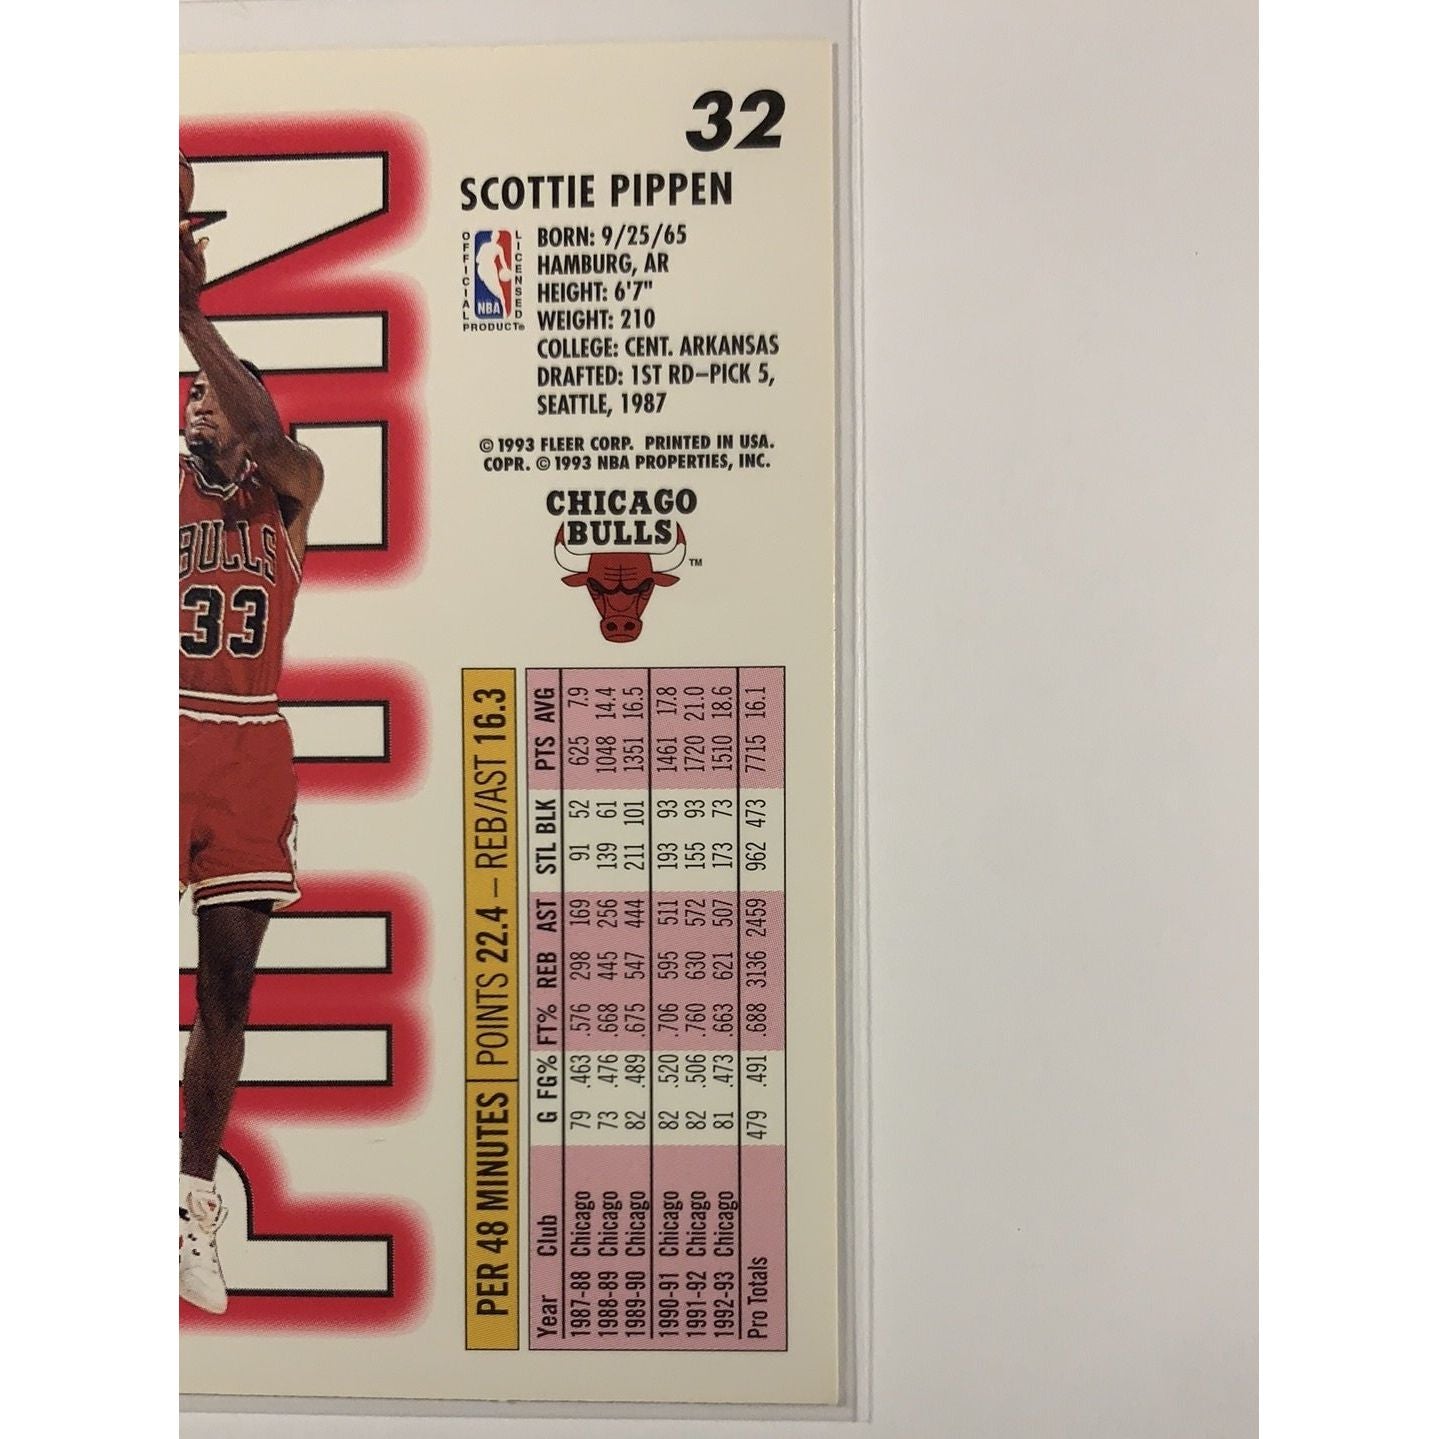  1993-94 Fleer Scottie Pippen Base #32  Local Legends Cards & Collectibles